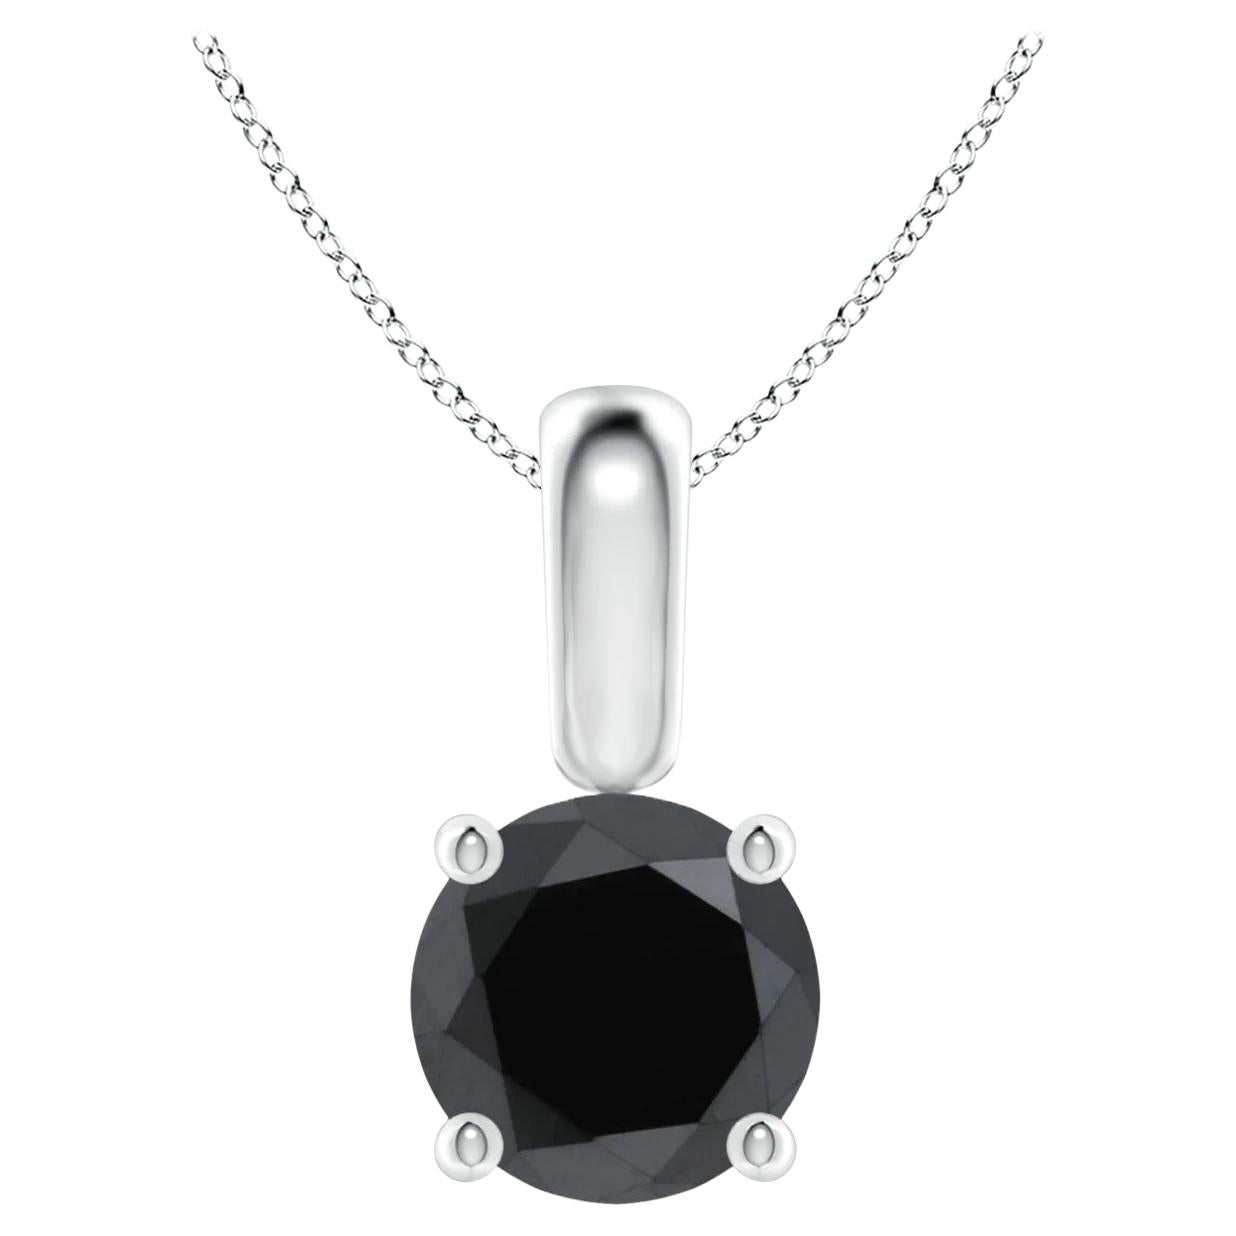 1.29 Carat Round Black Diamond Solitaire Pendant Necklace in 14K White Gold